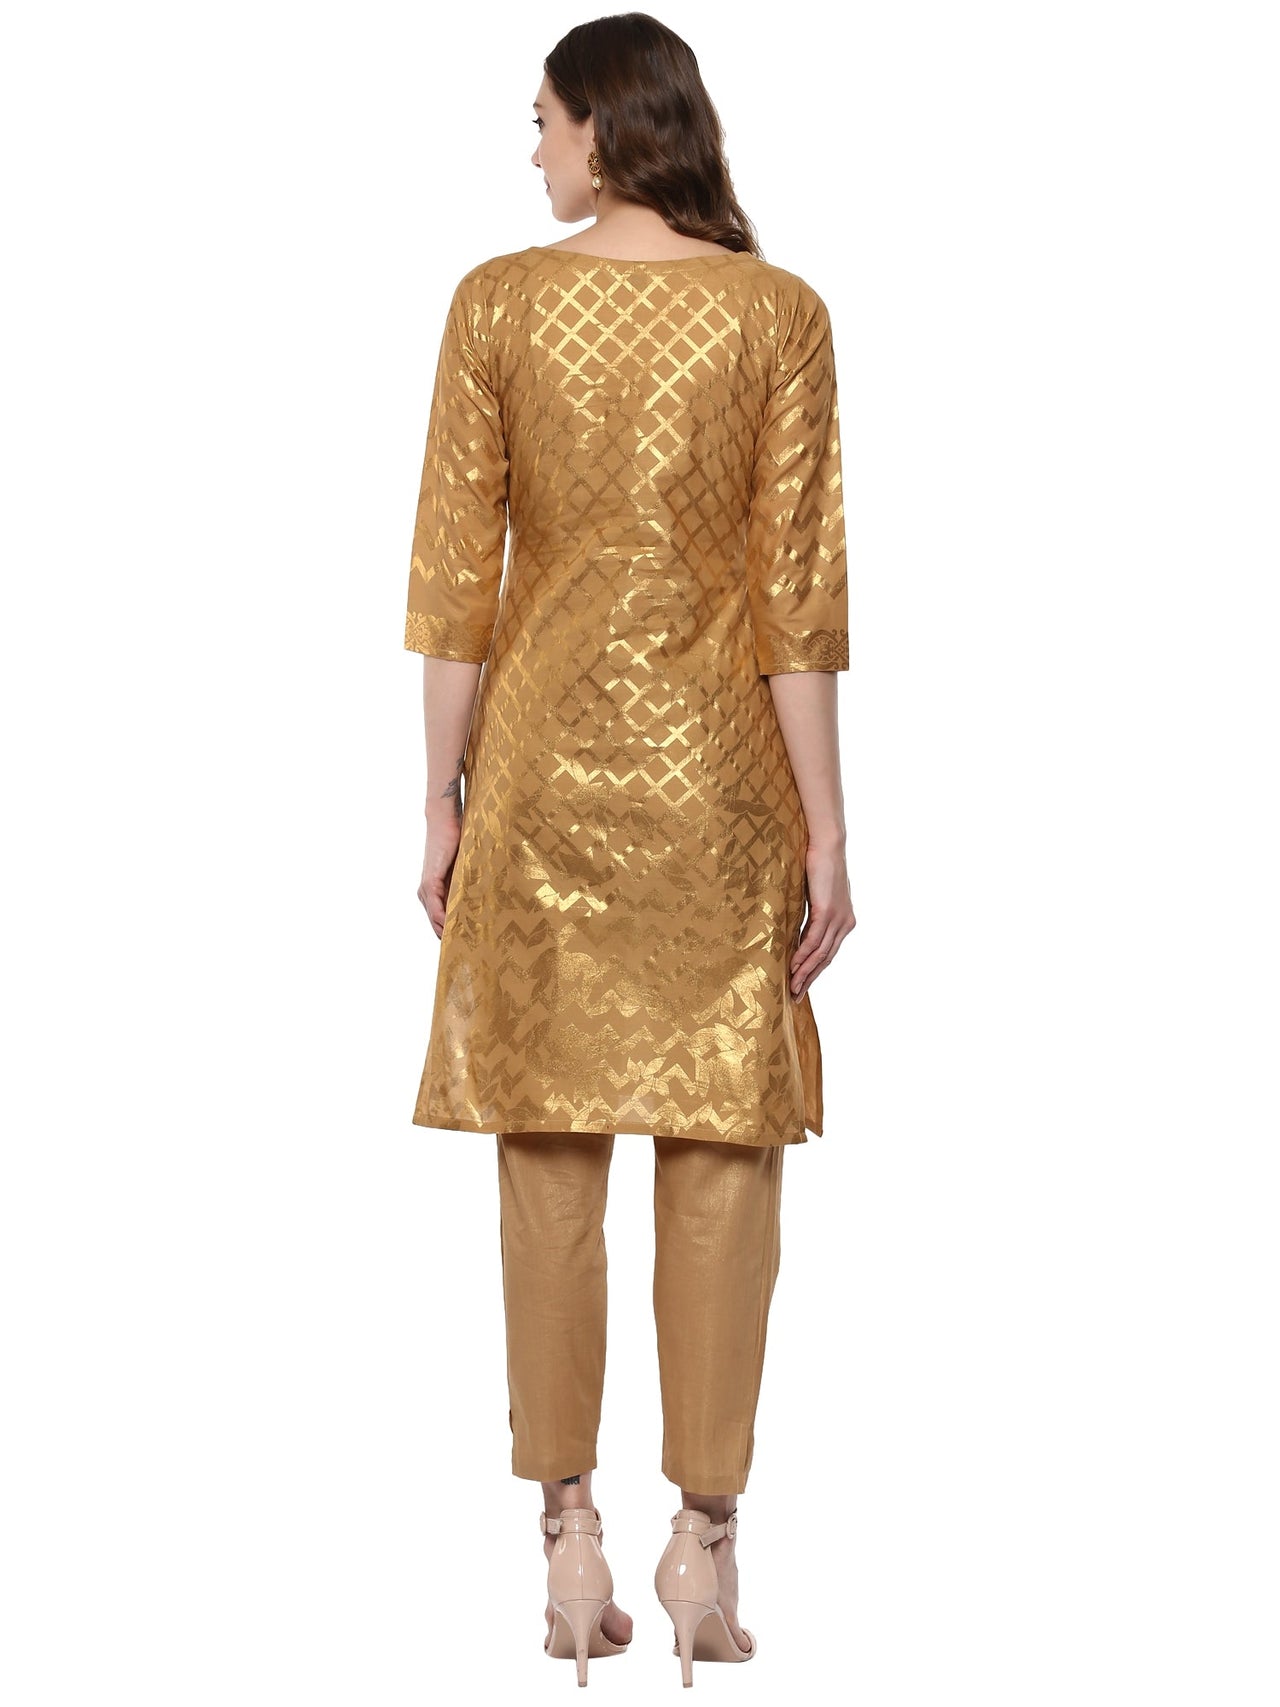 Ahalyaa Short Beige Cotton Blend Kurta With Metallic Gold Chevron Print